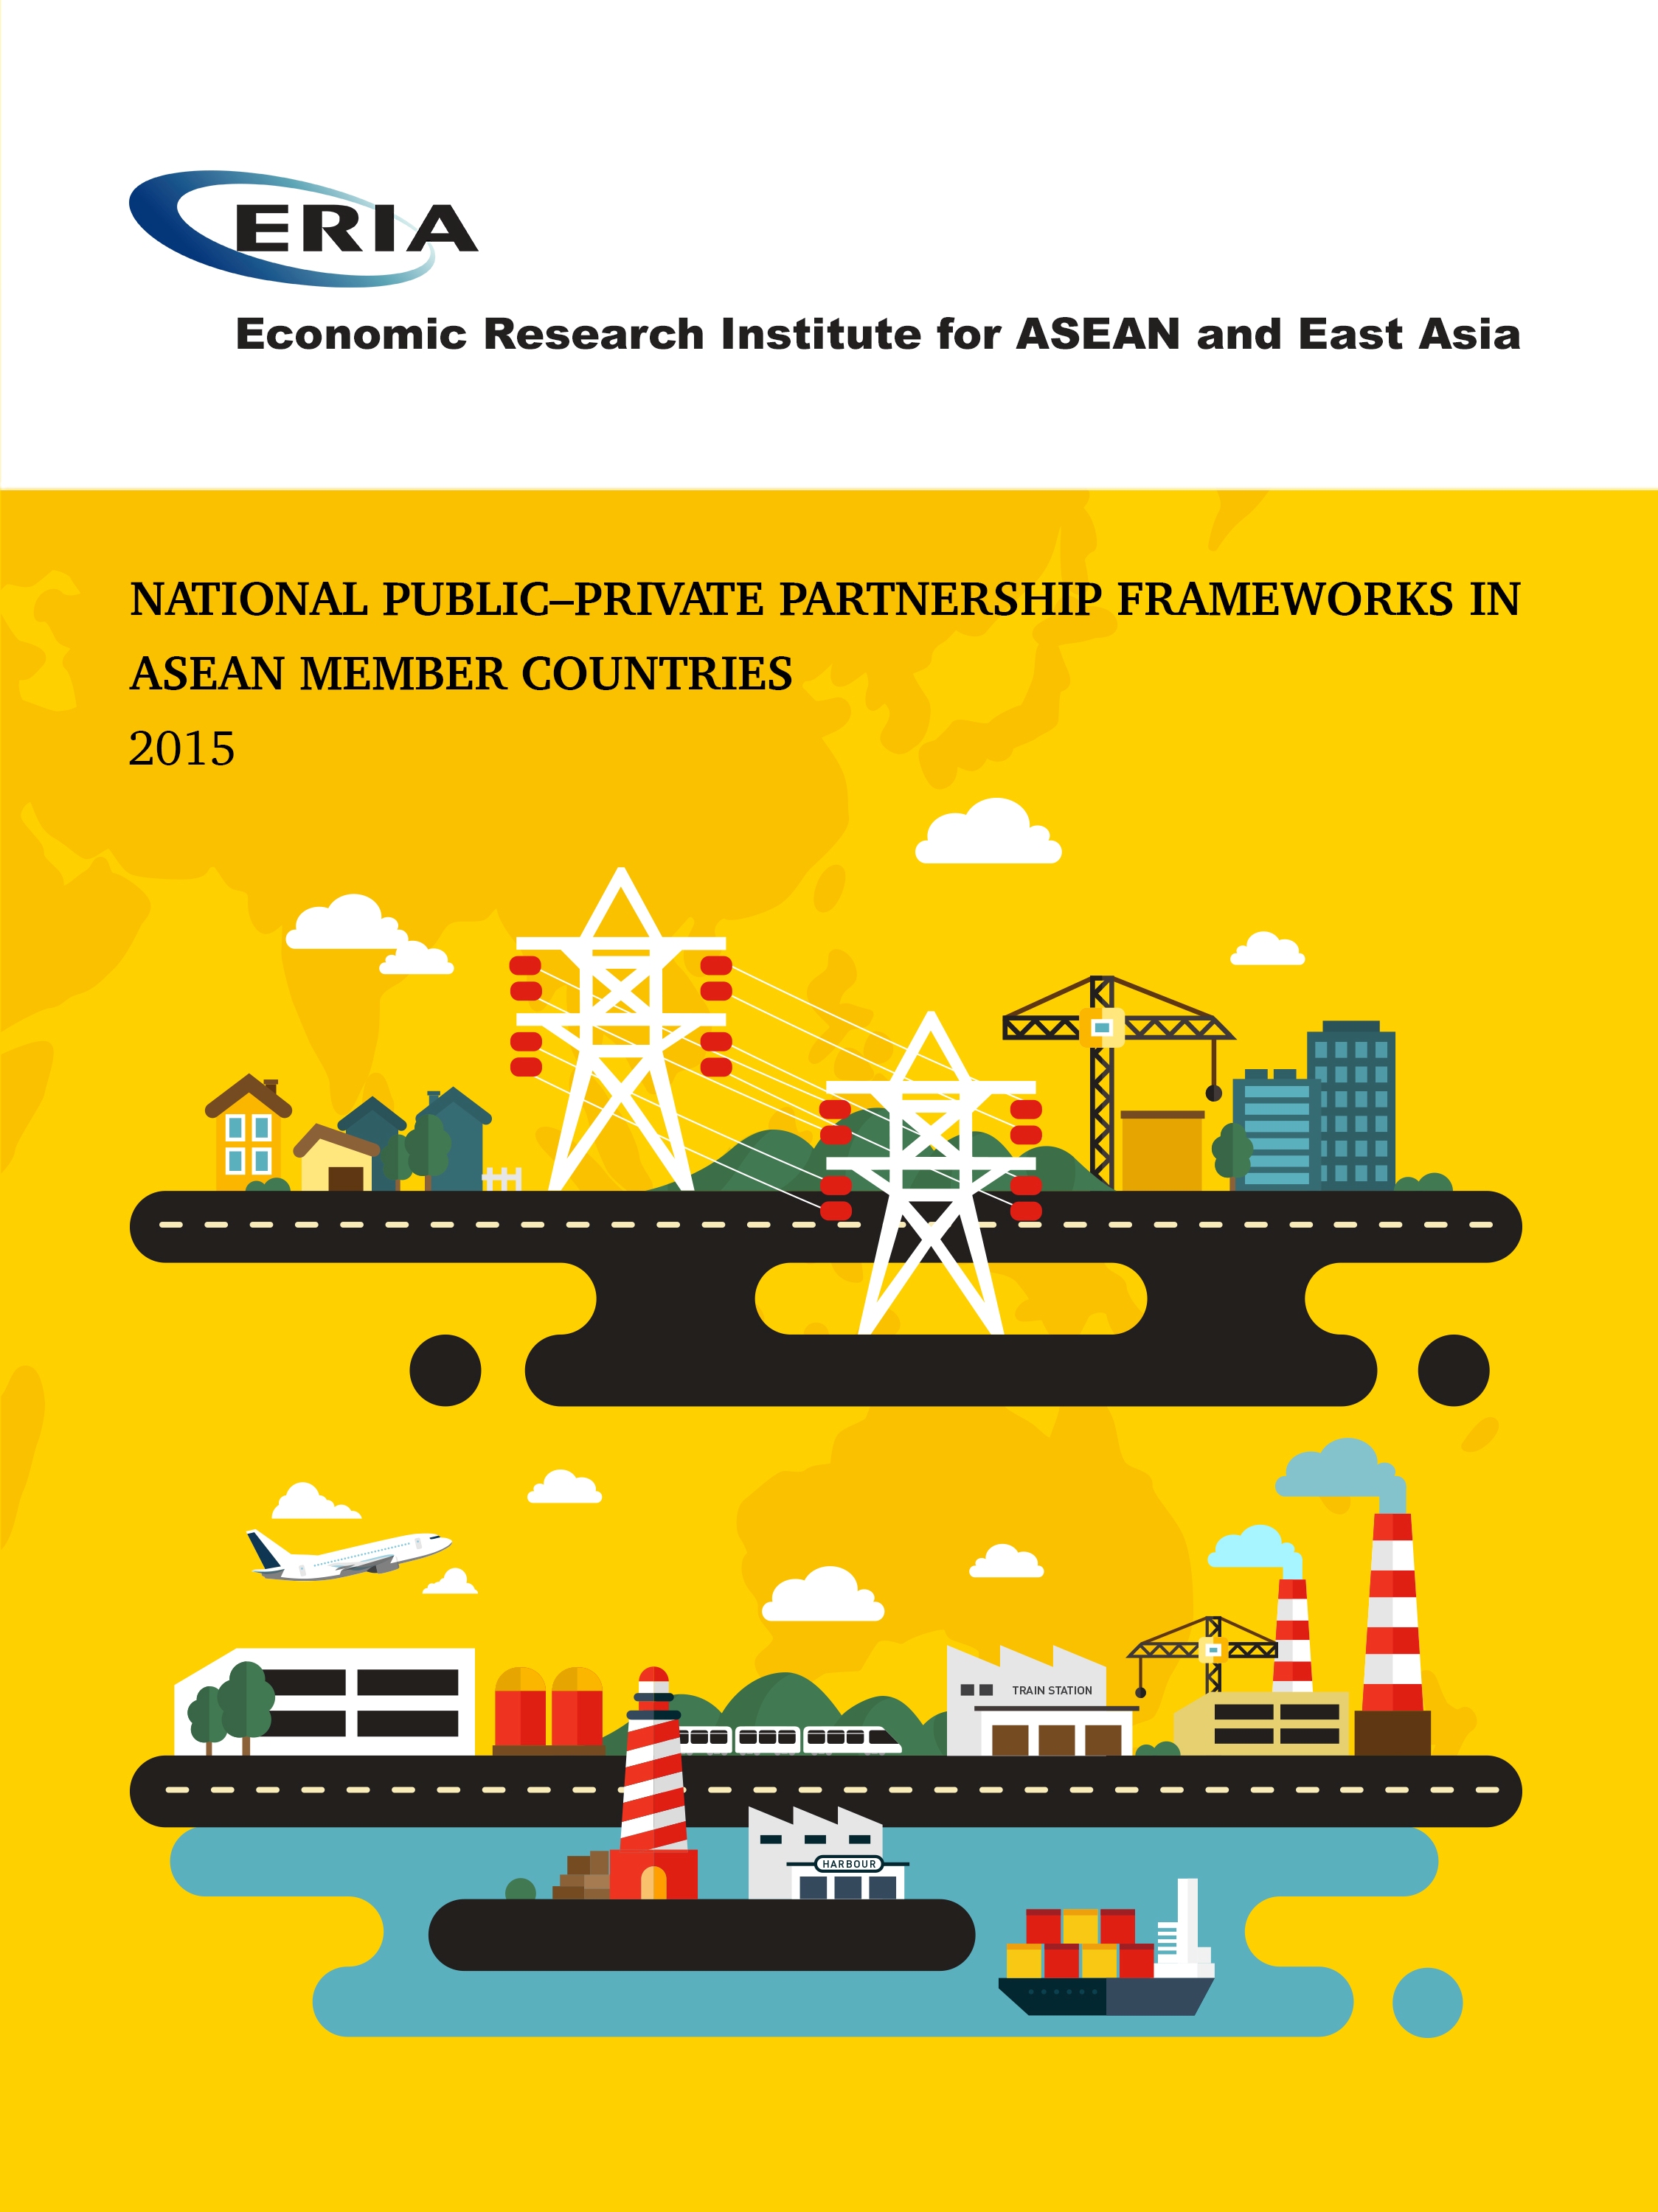 National Public-Private Partnership Framework in ASEAN Member Countries